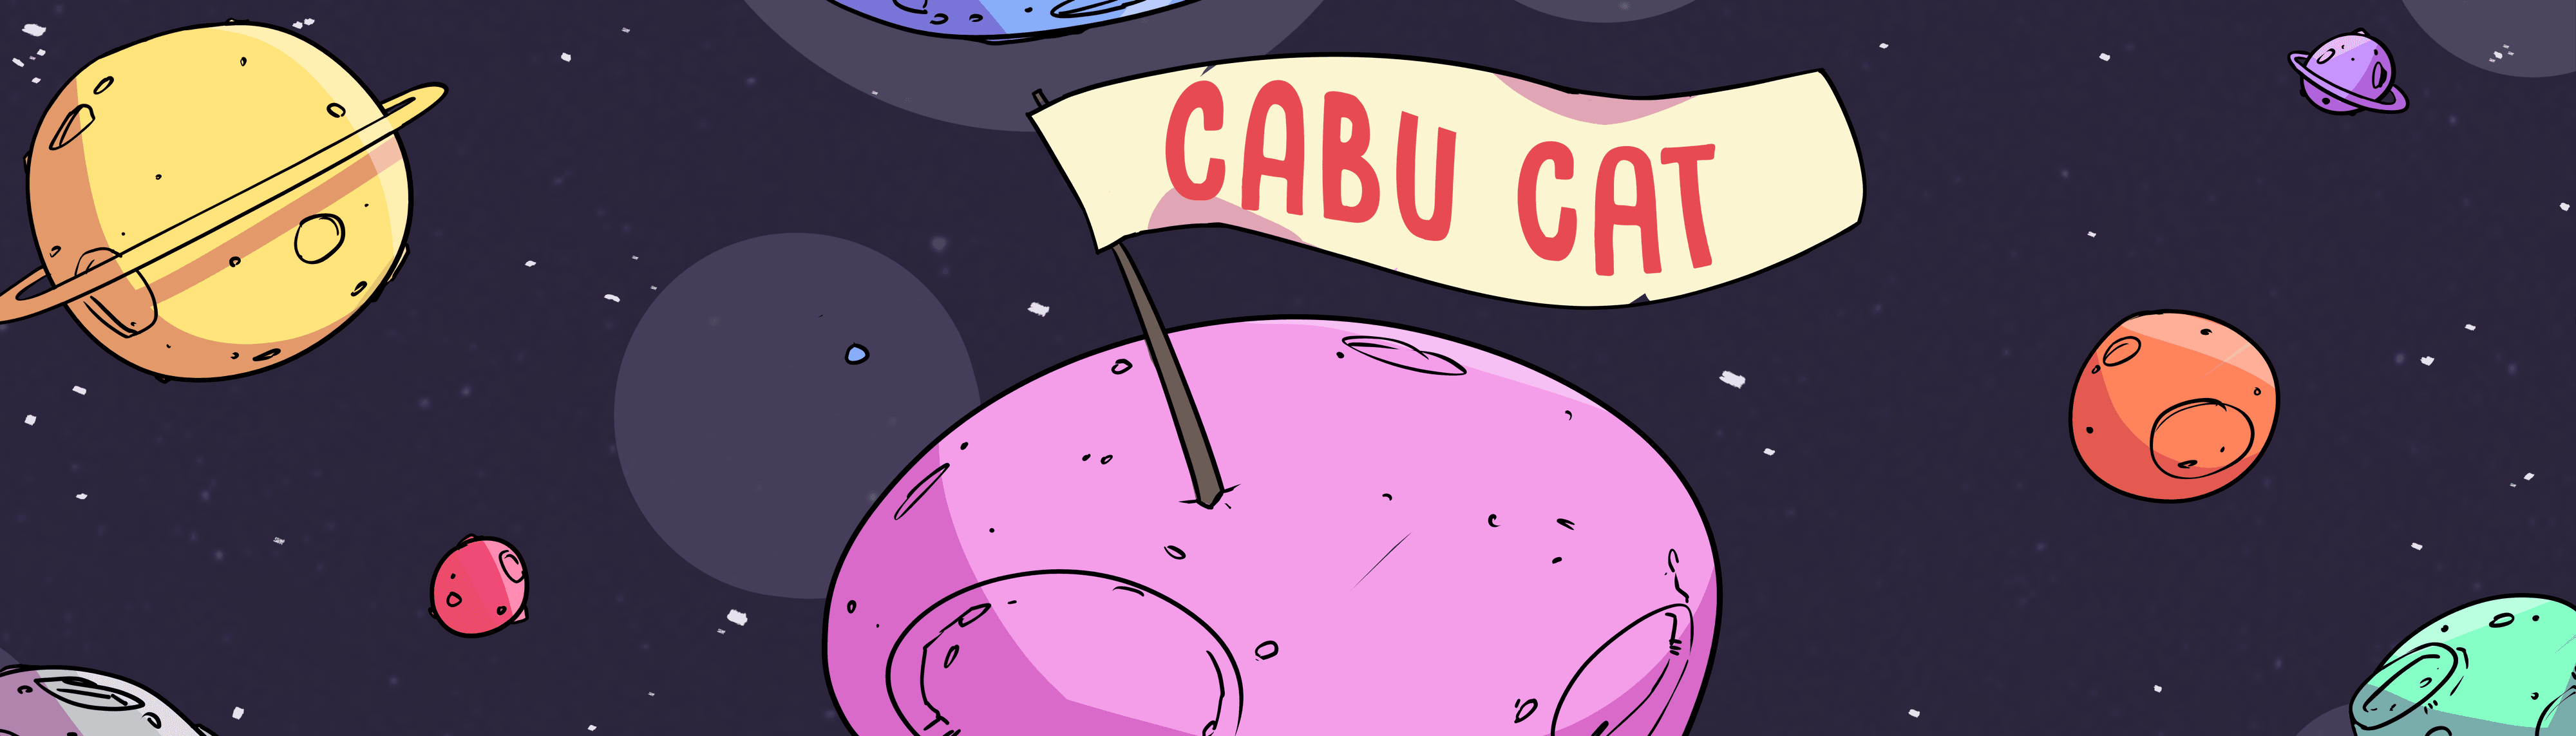 Cabu-Cats-Team banner